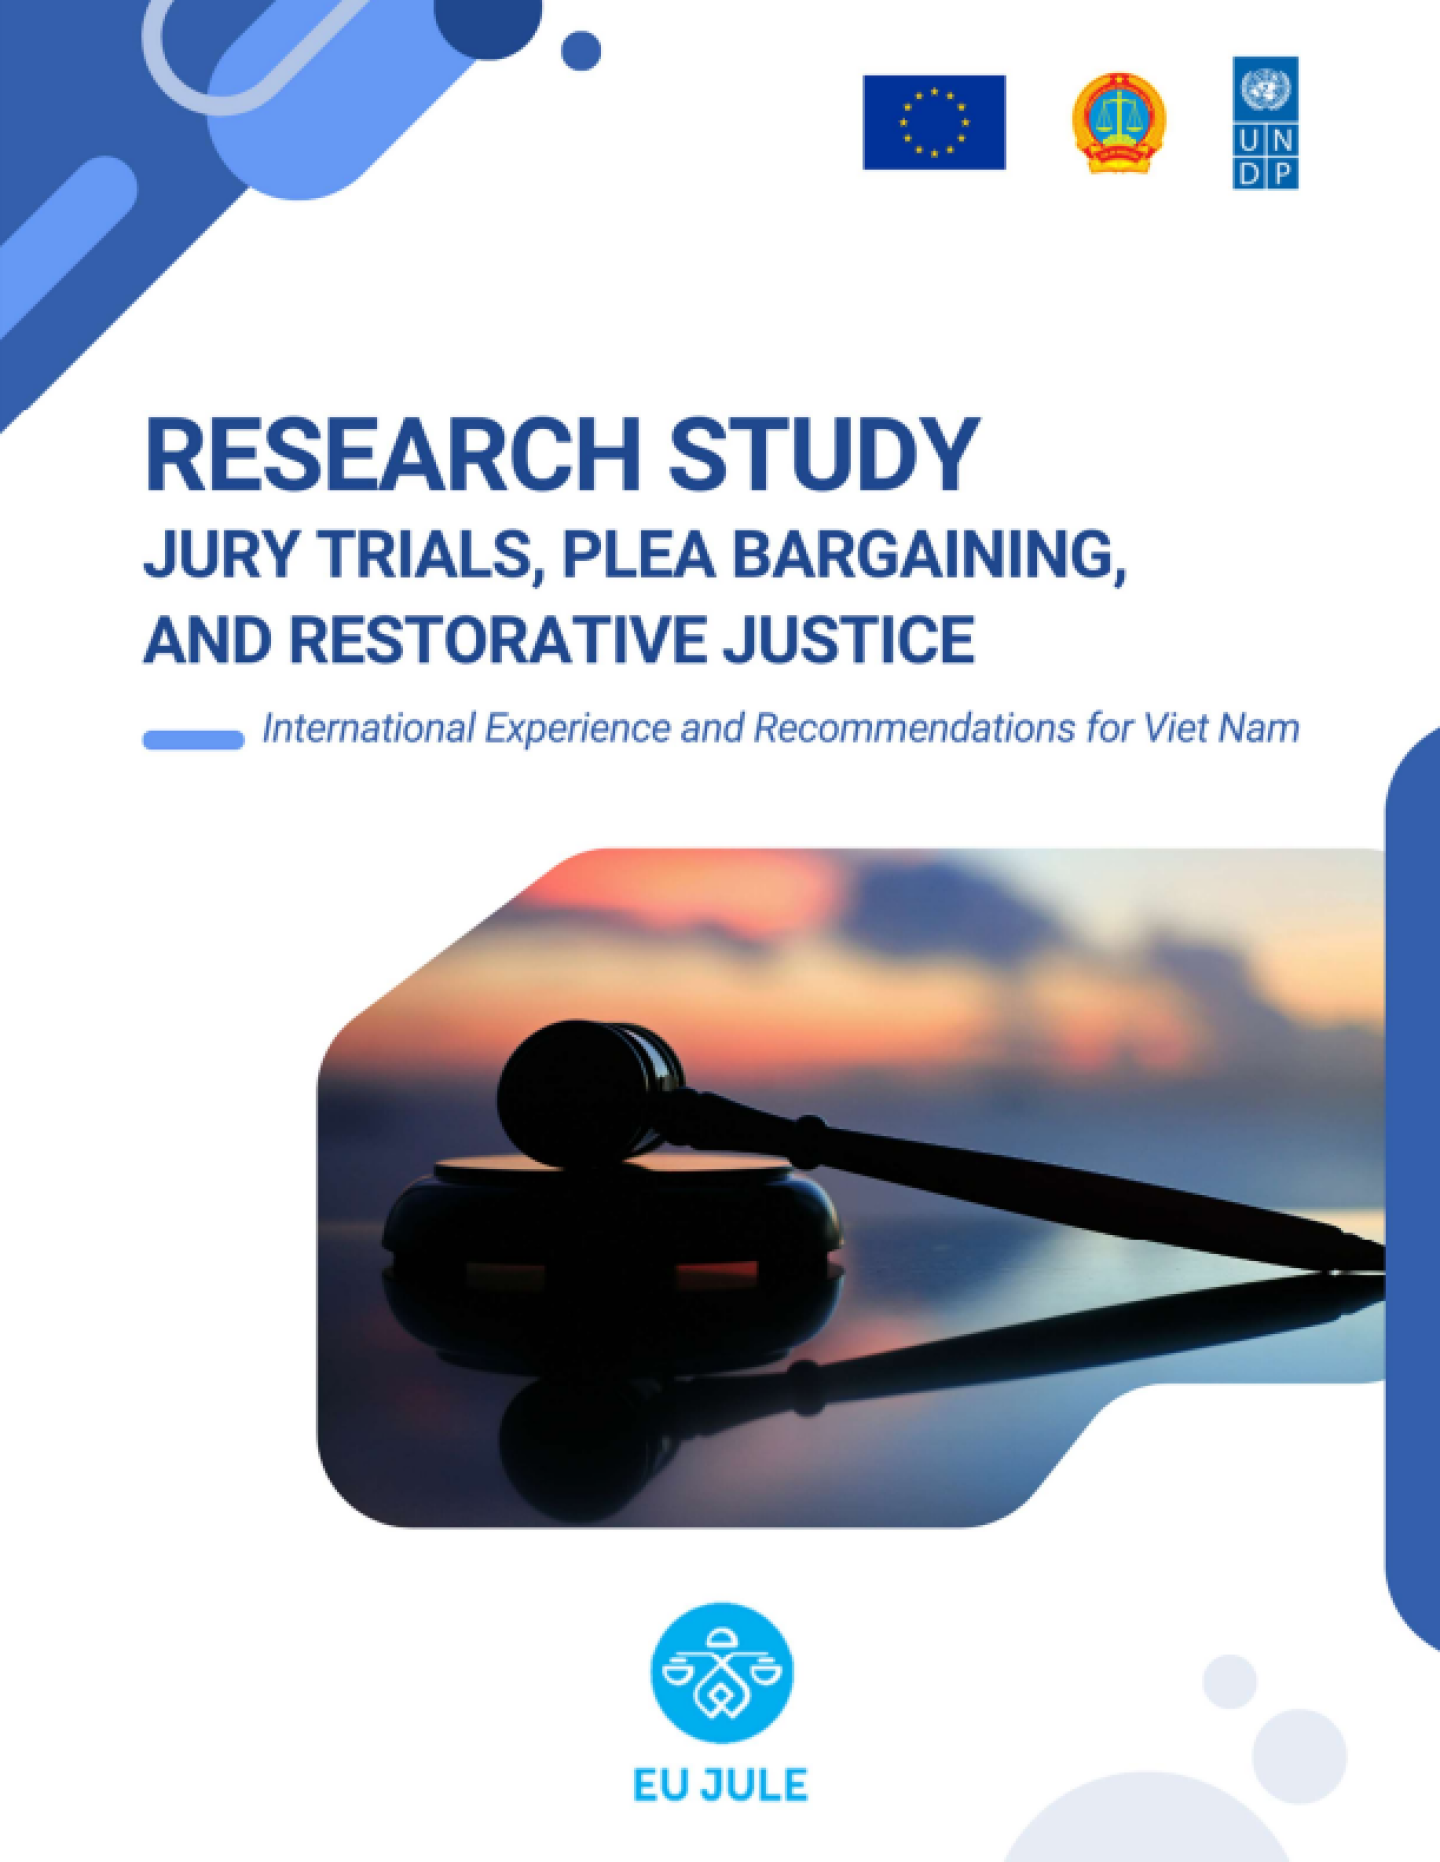 The Politics of Restorative Justice, 2nd edition: A Critical